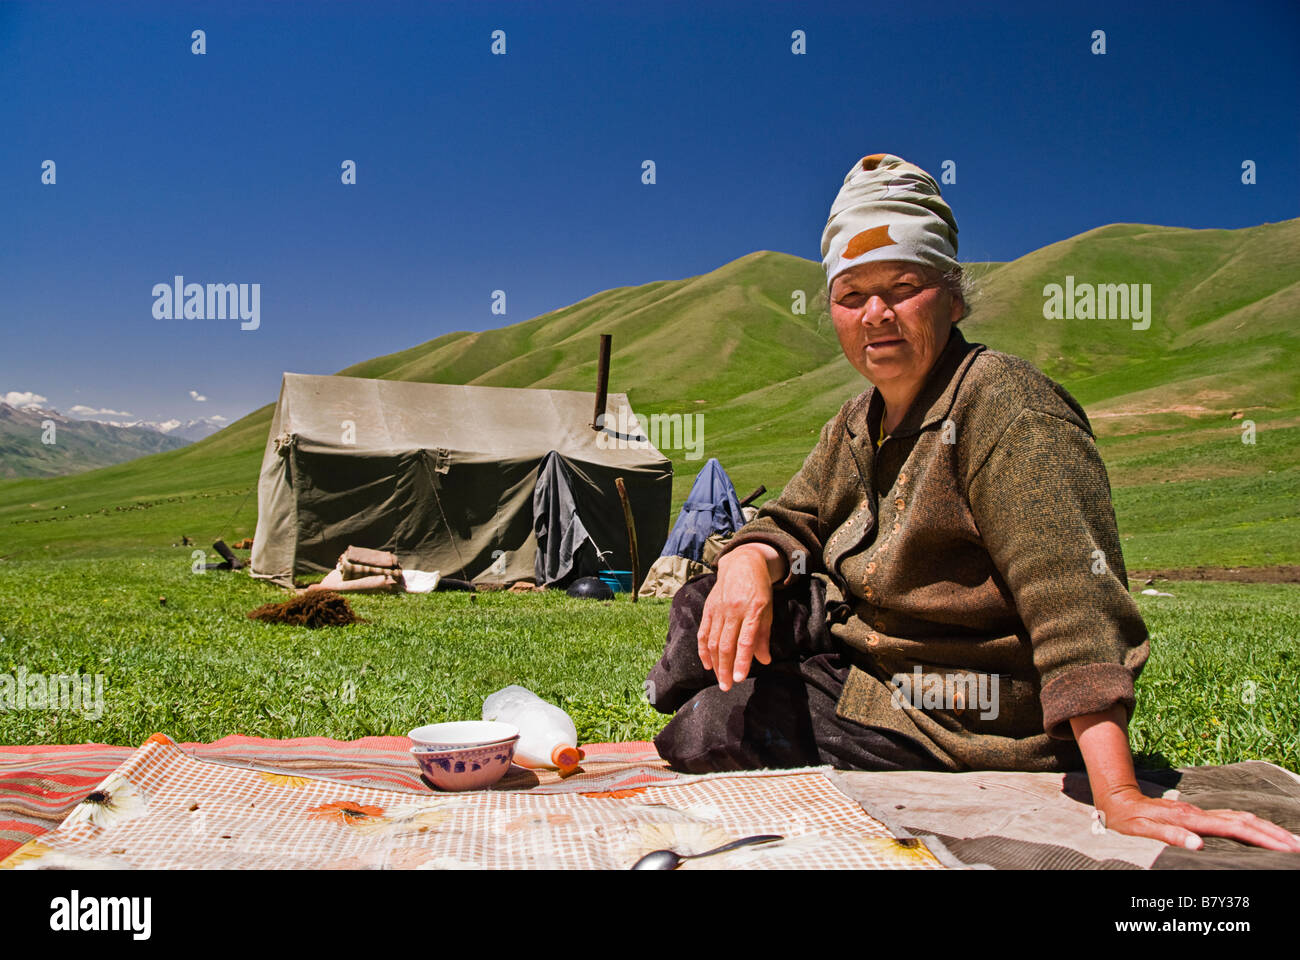 Kyrgyz woman outside a tent drinking horse milk Kyrgyzstan Stock Photo